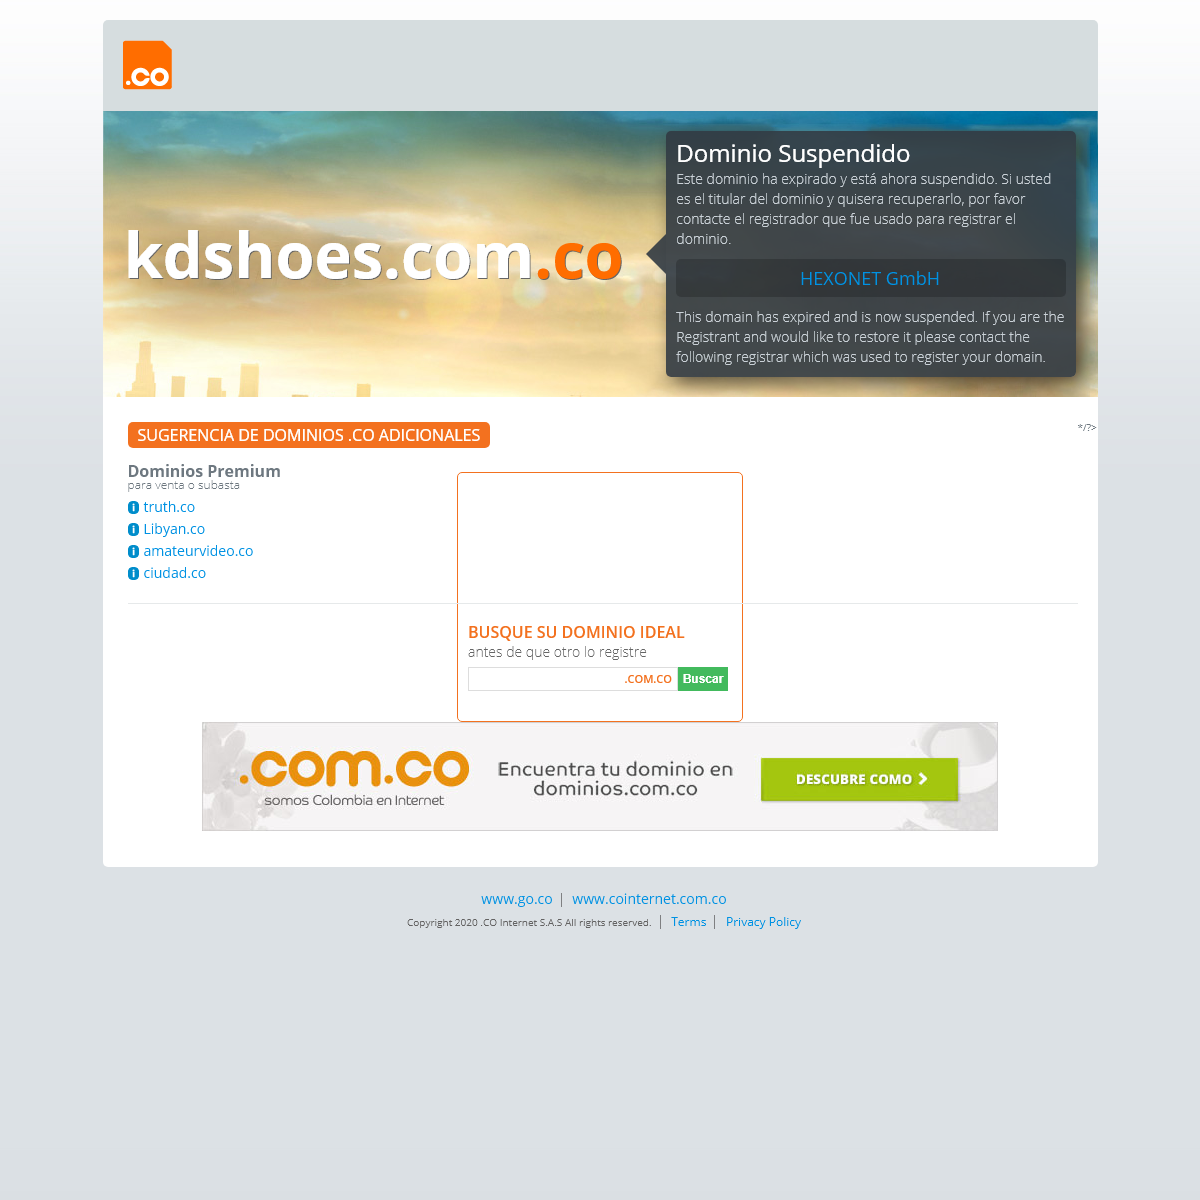 A complete backup of kdshoes.com.co